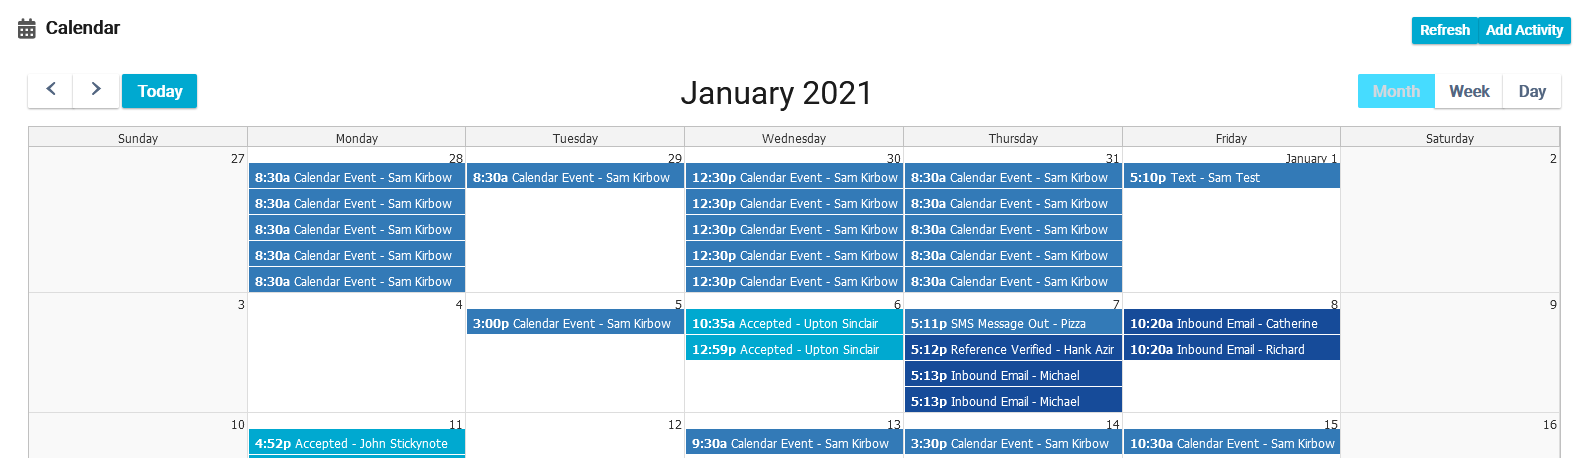 calendar_dashboard.PNG